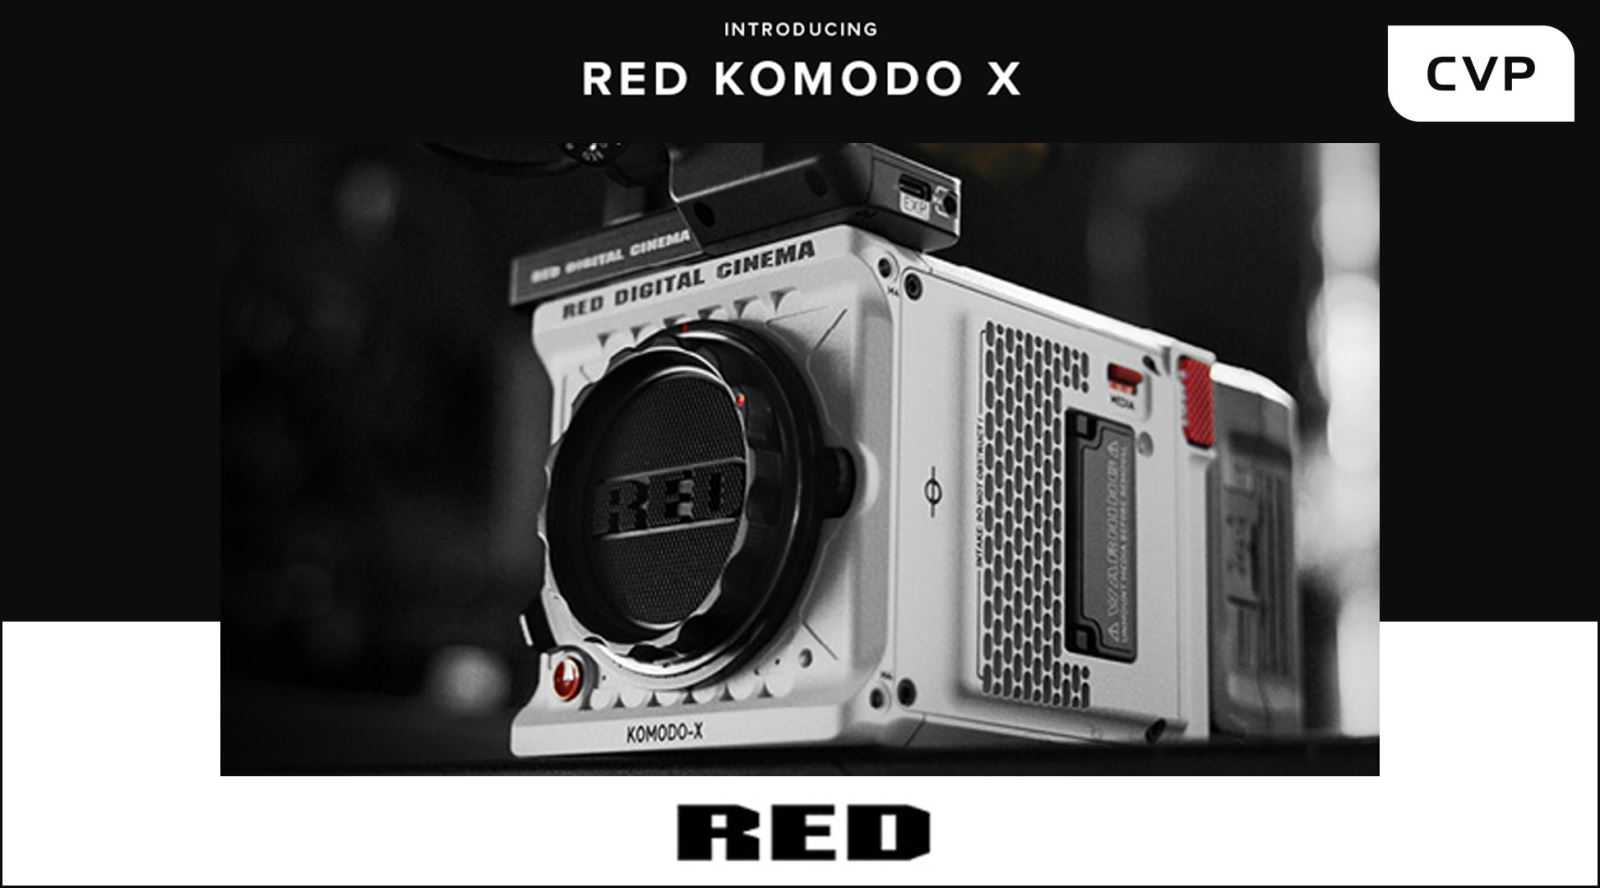 CVP Introduces RED KOMODO X